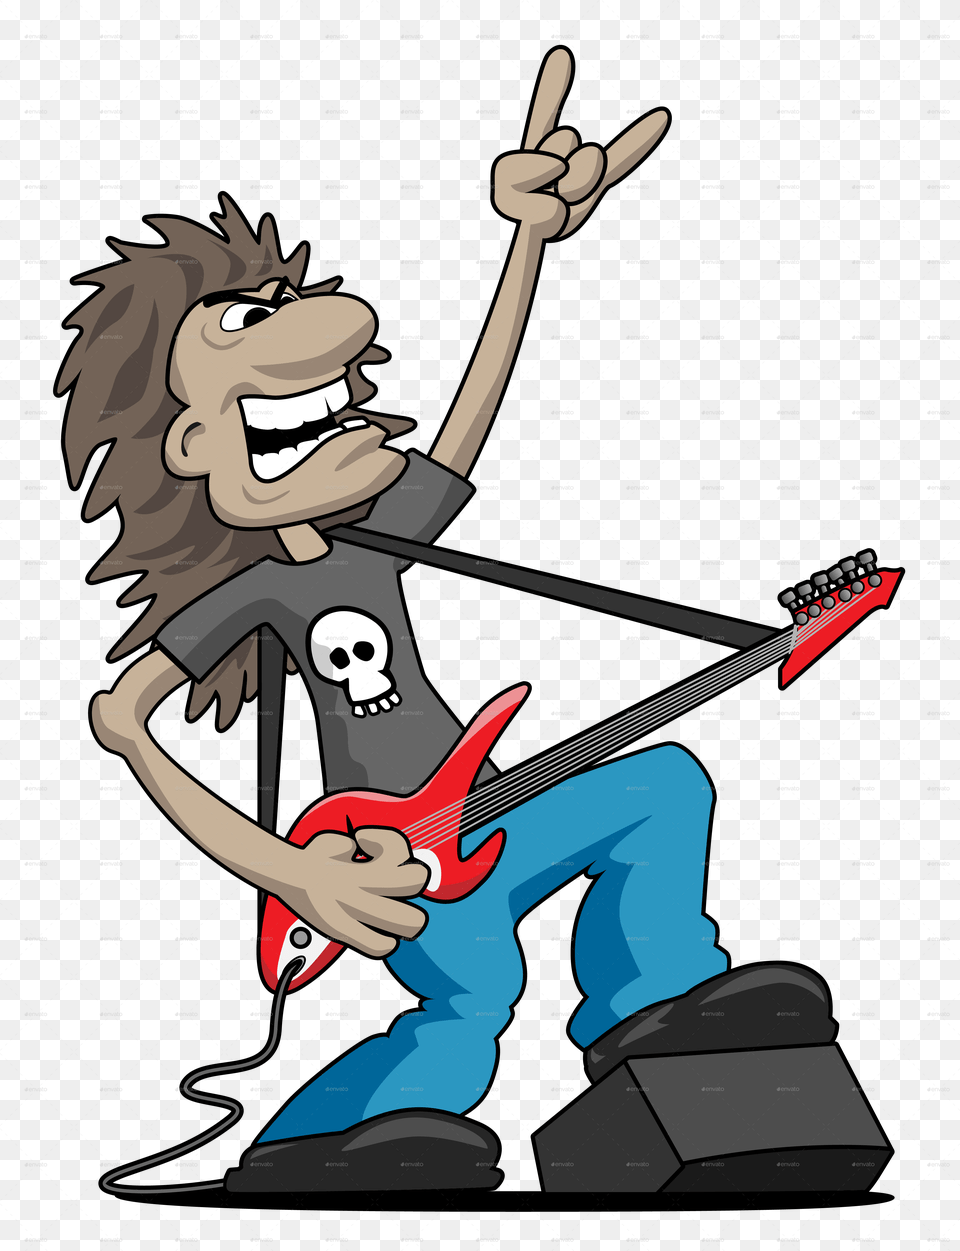 Heavy Metal Rock Guitarist Cartoon Guitar Rock Star Cartoon, Musical Instrument, Performer, Person Png Image